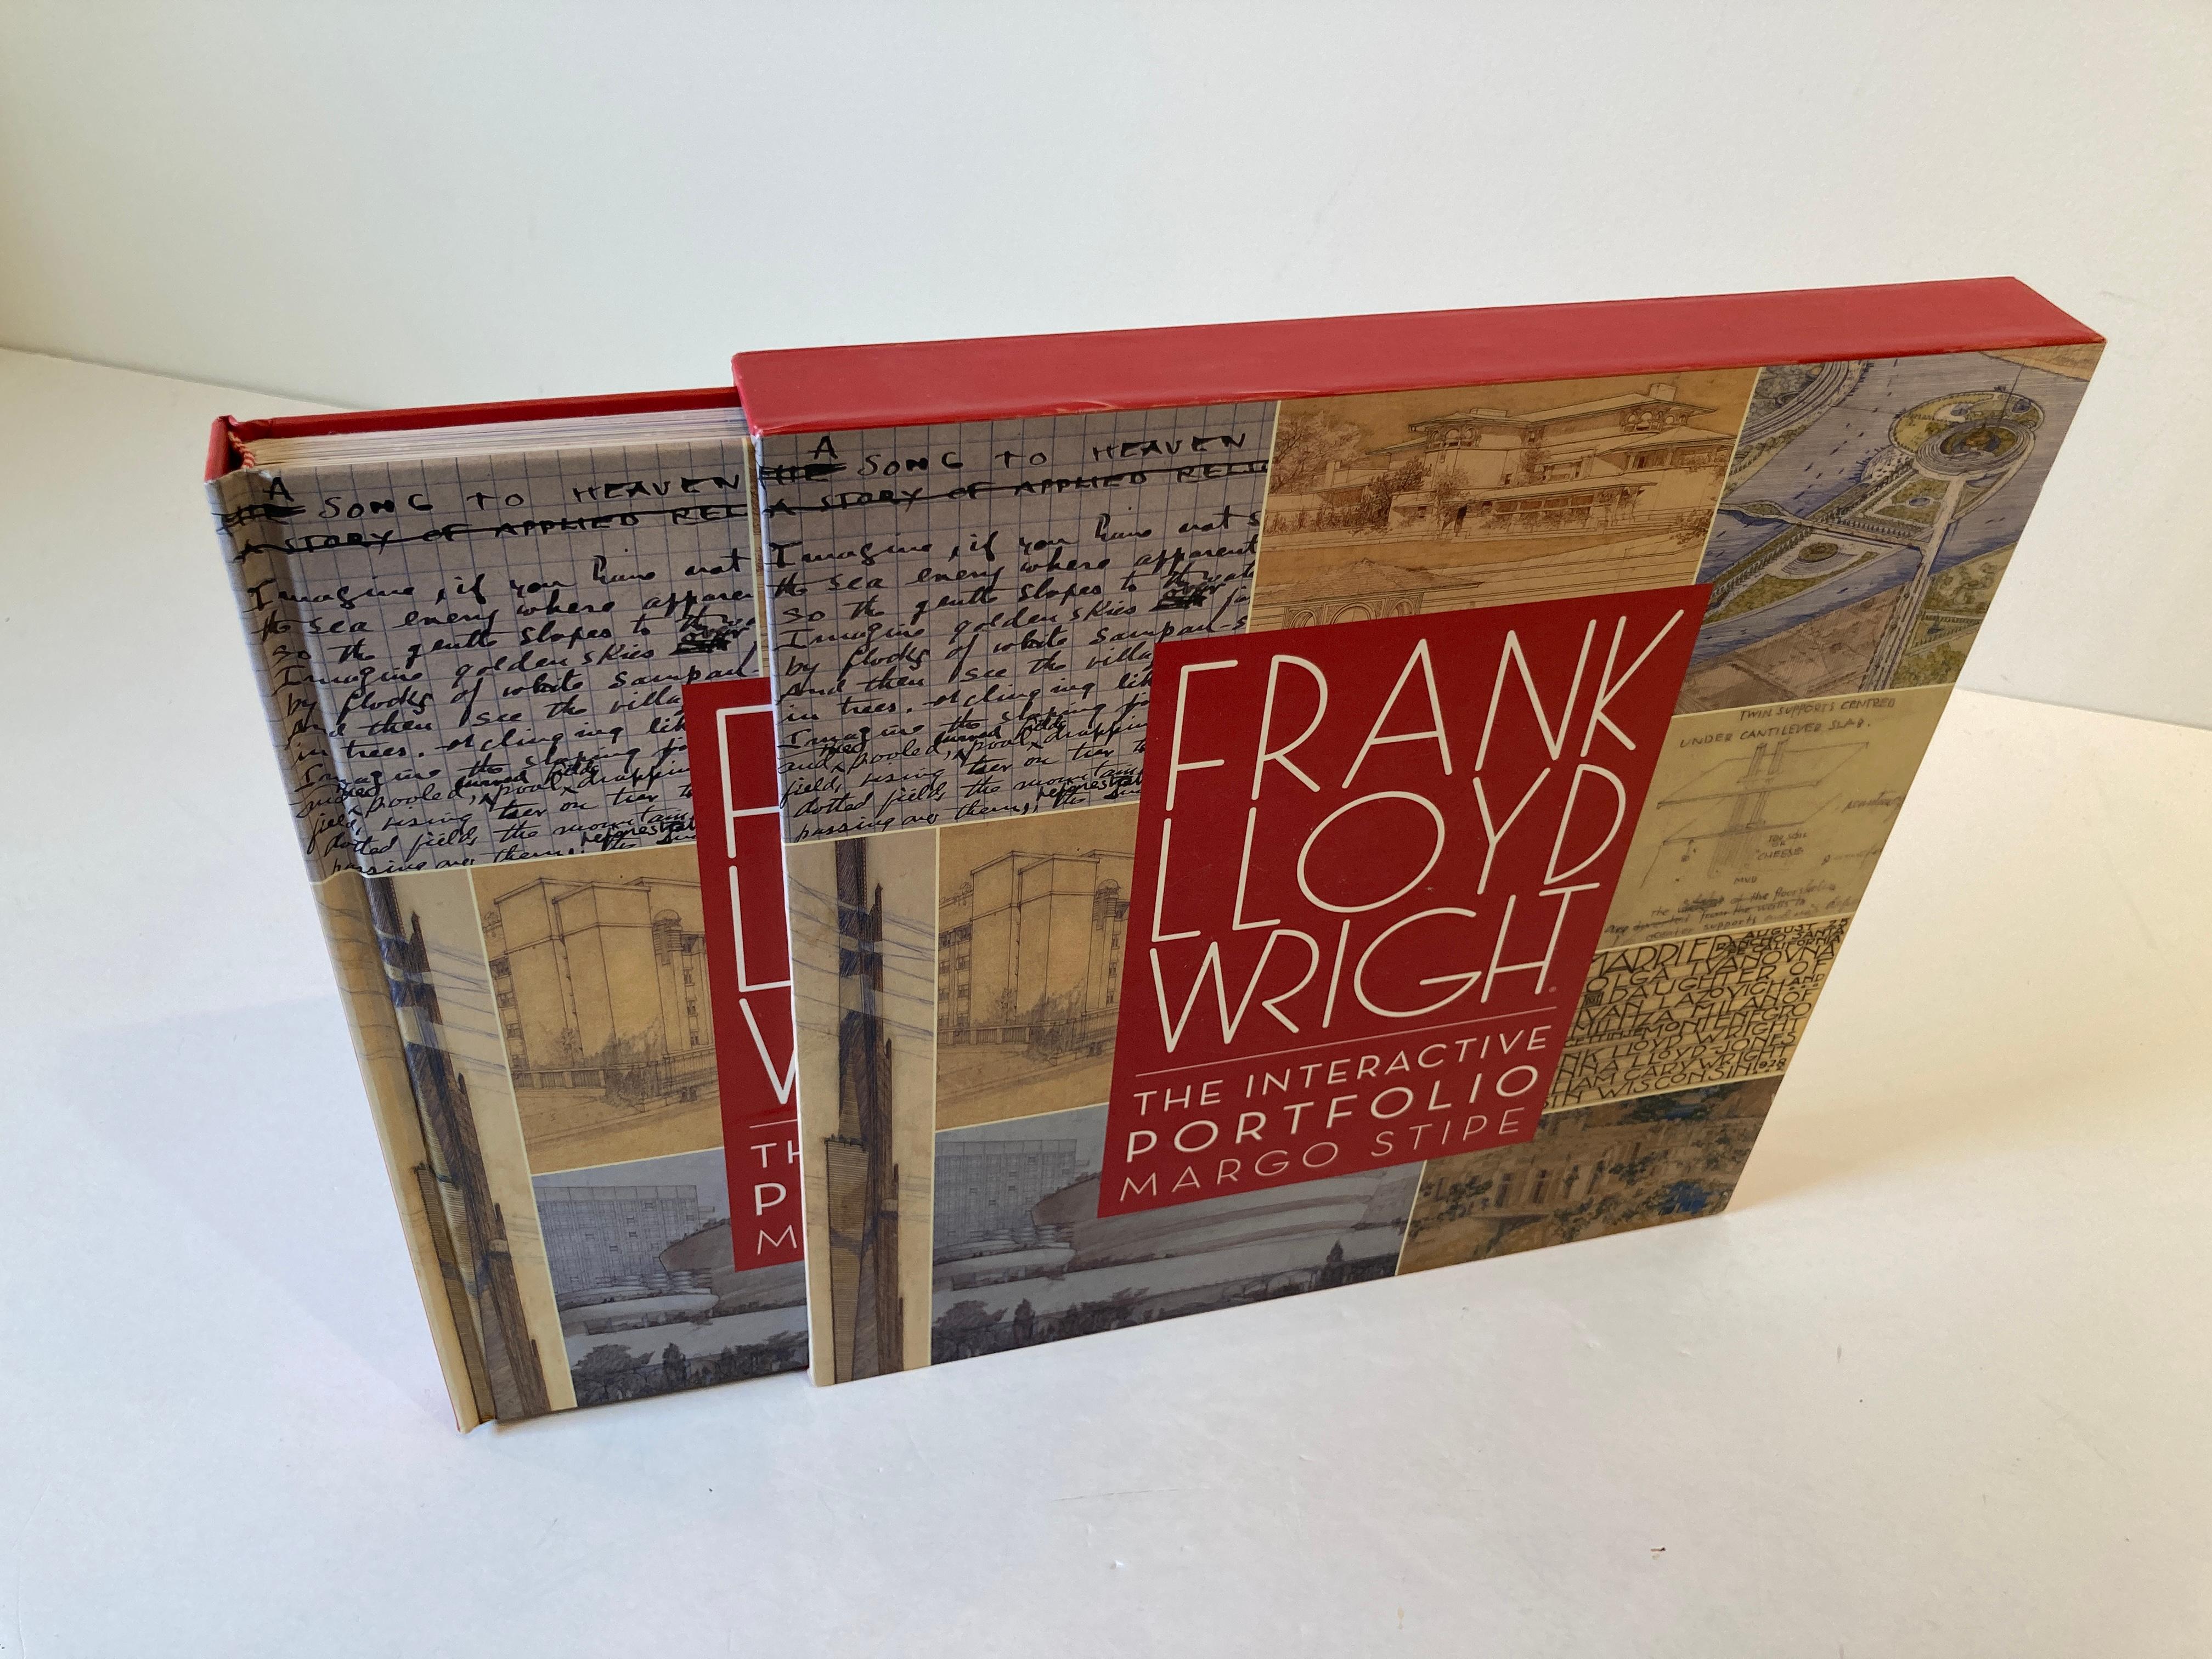 American Frank Lloyd Wright The Interactive Portfolio by Margot Stipe Book